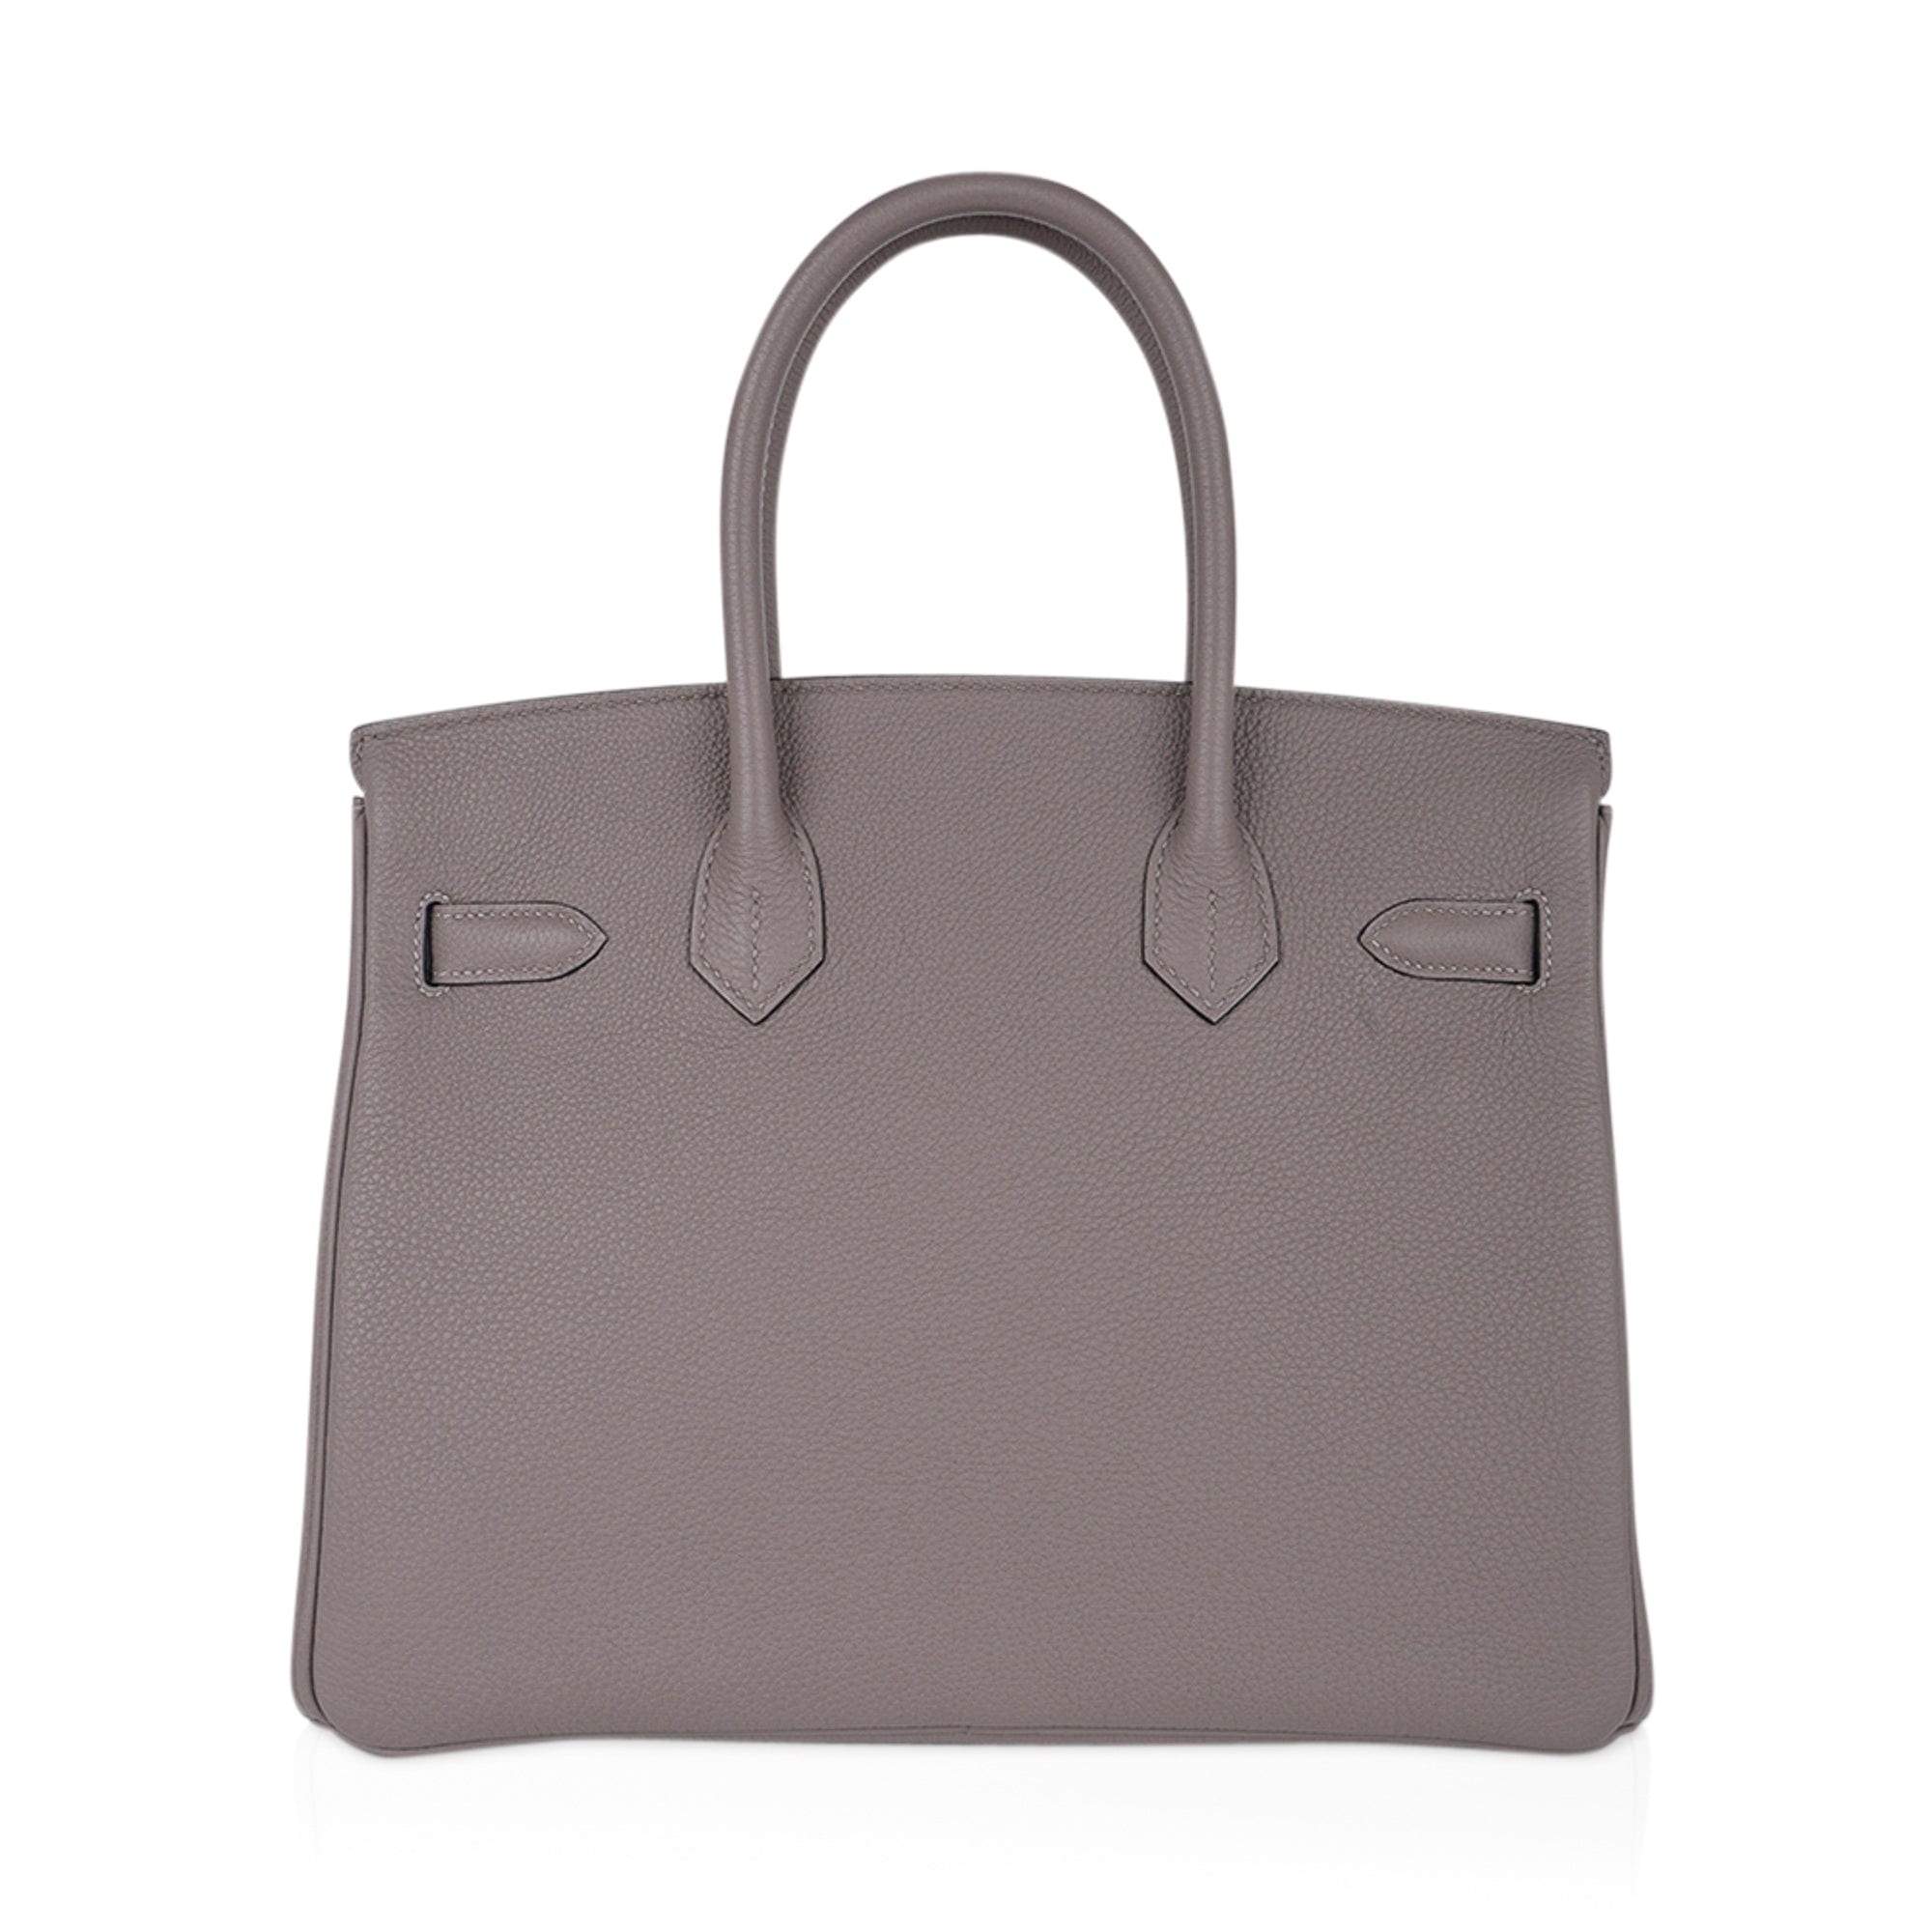 Hermes Grey Togo Leather Palladium Hardware Birkin Jpg Bag